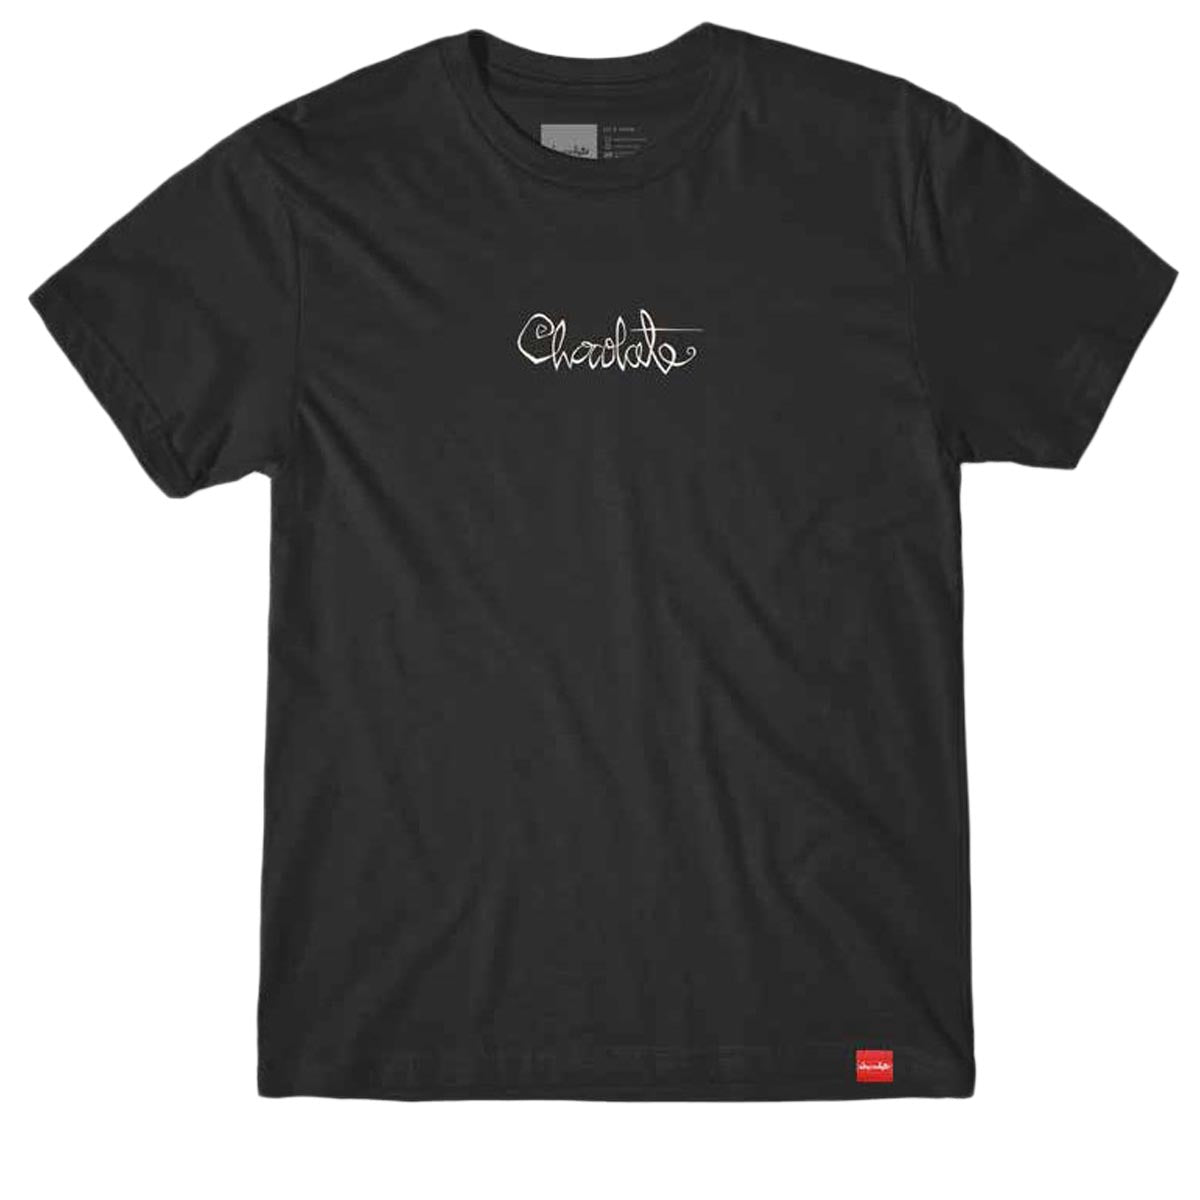 Chocolate 94 Script T-Shirt - Black image 1